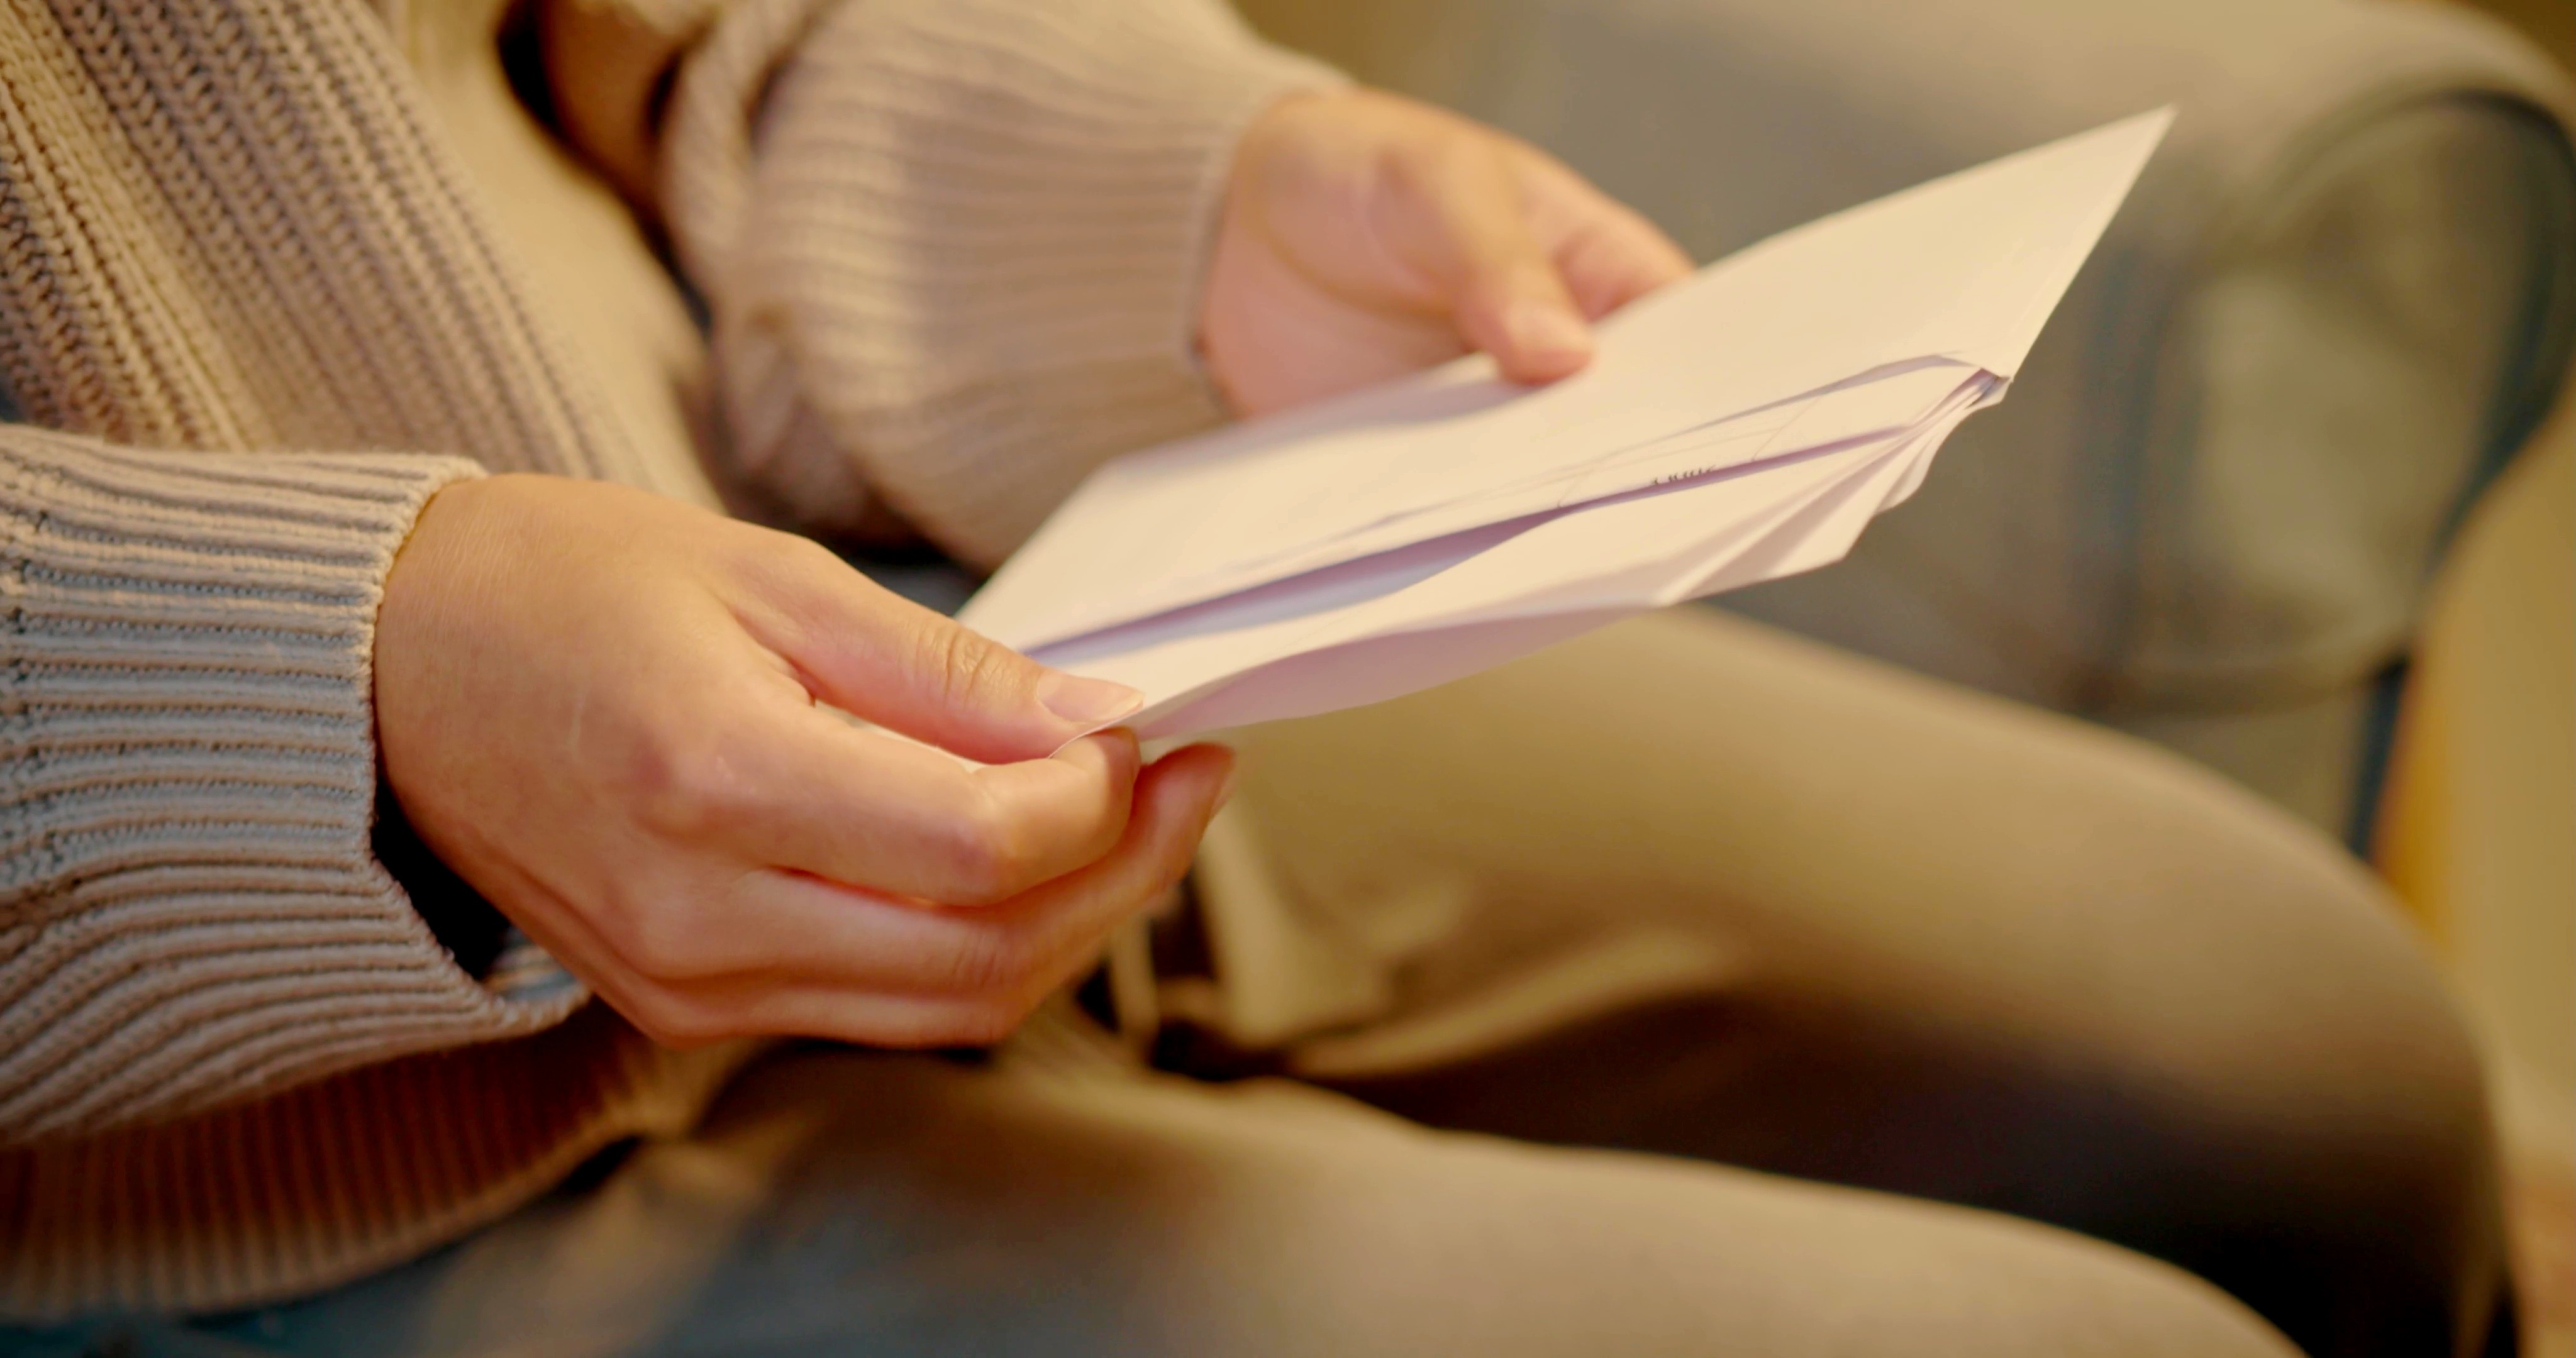 Femme ouvrant une enveloppe | Source : Shutterstock